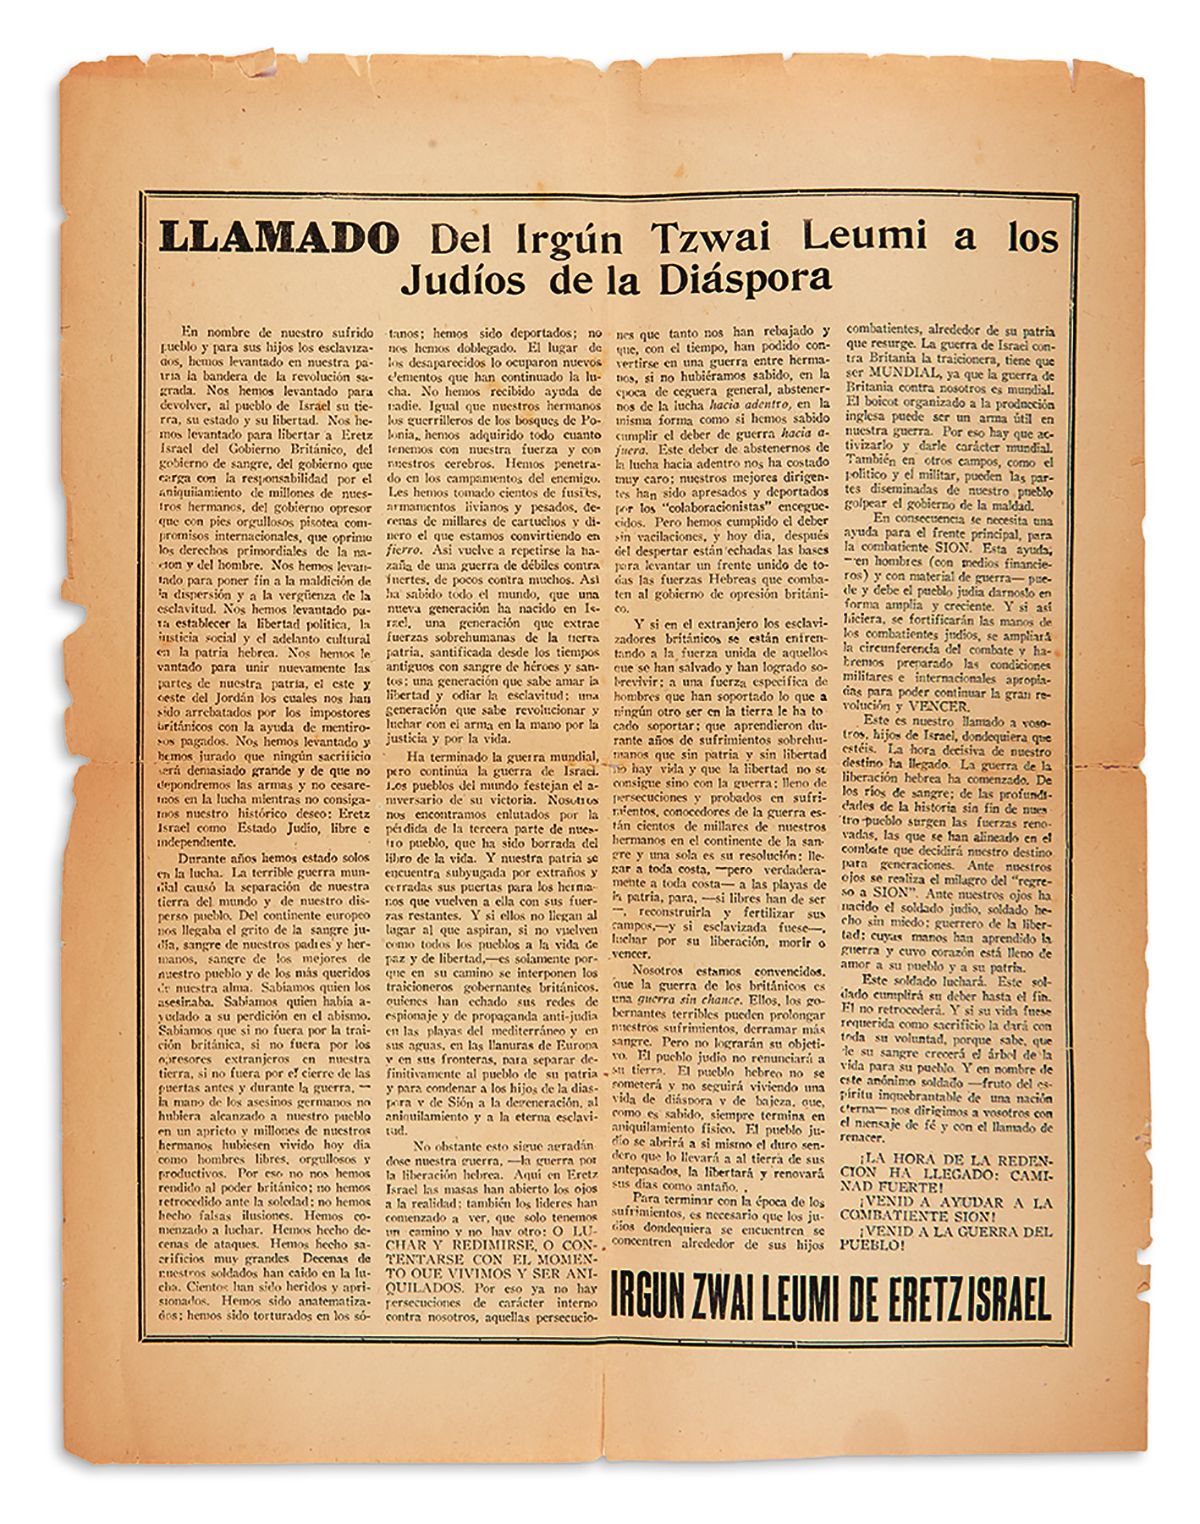 Llamado Del Irgun Tzwai Leumi a los Judios de la Diaspora [“A Call from the Irgun Tzvai Le’umi to the Jews of the Diaspora.”]